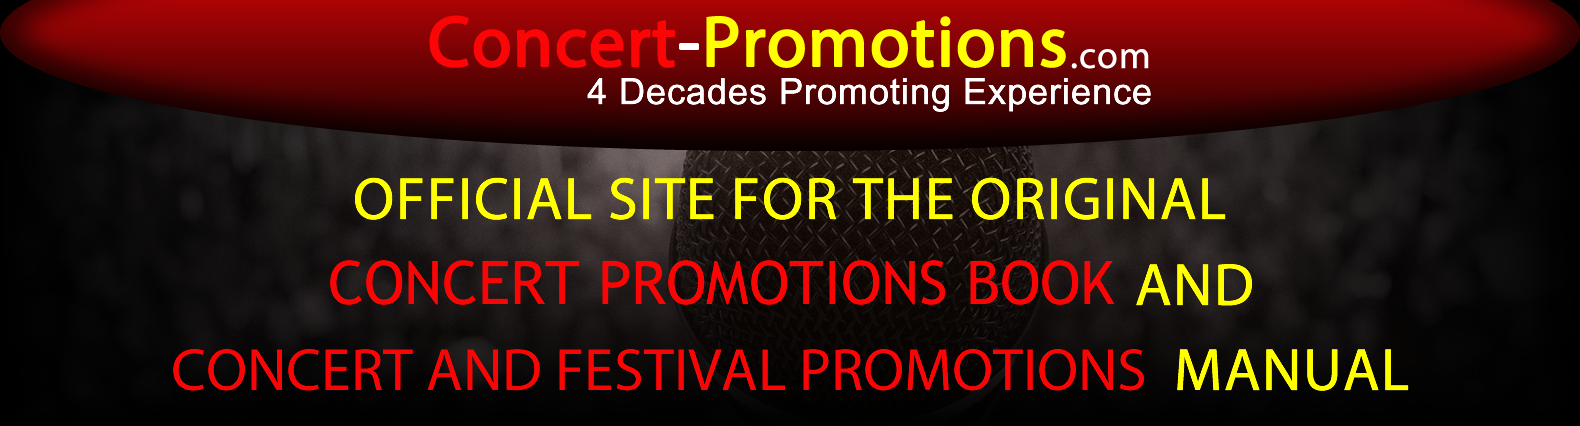 concert-promotions banner